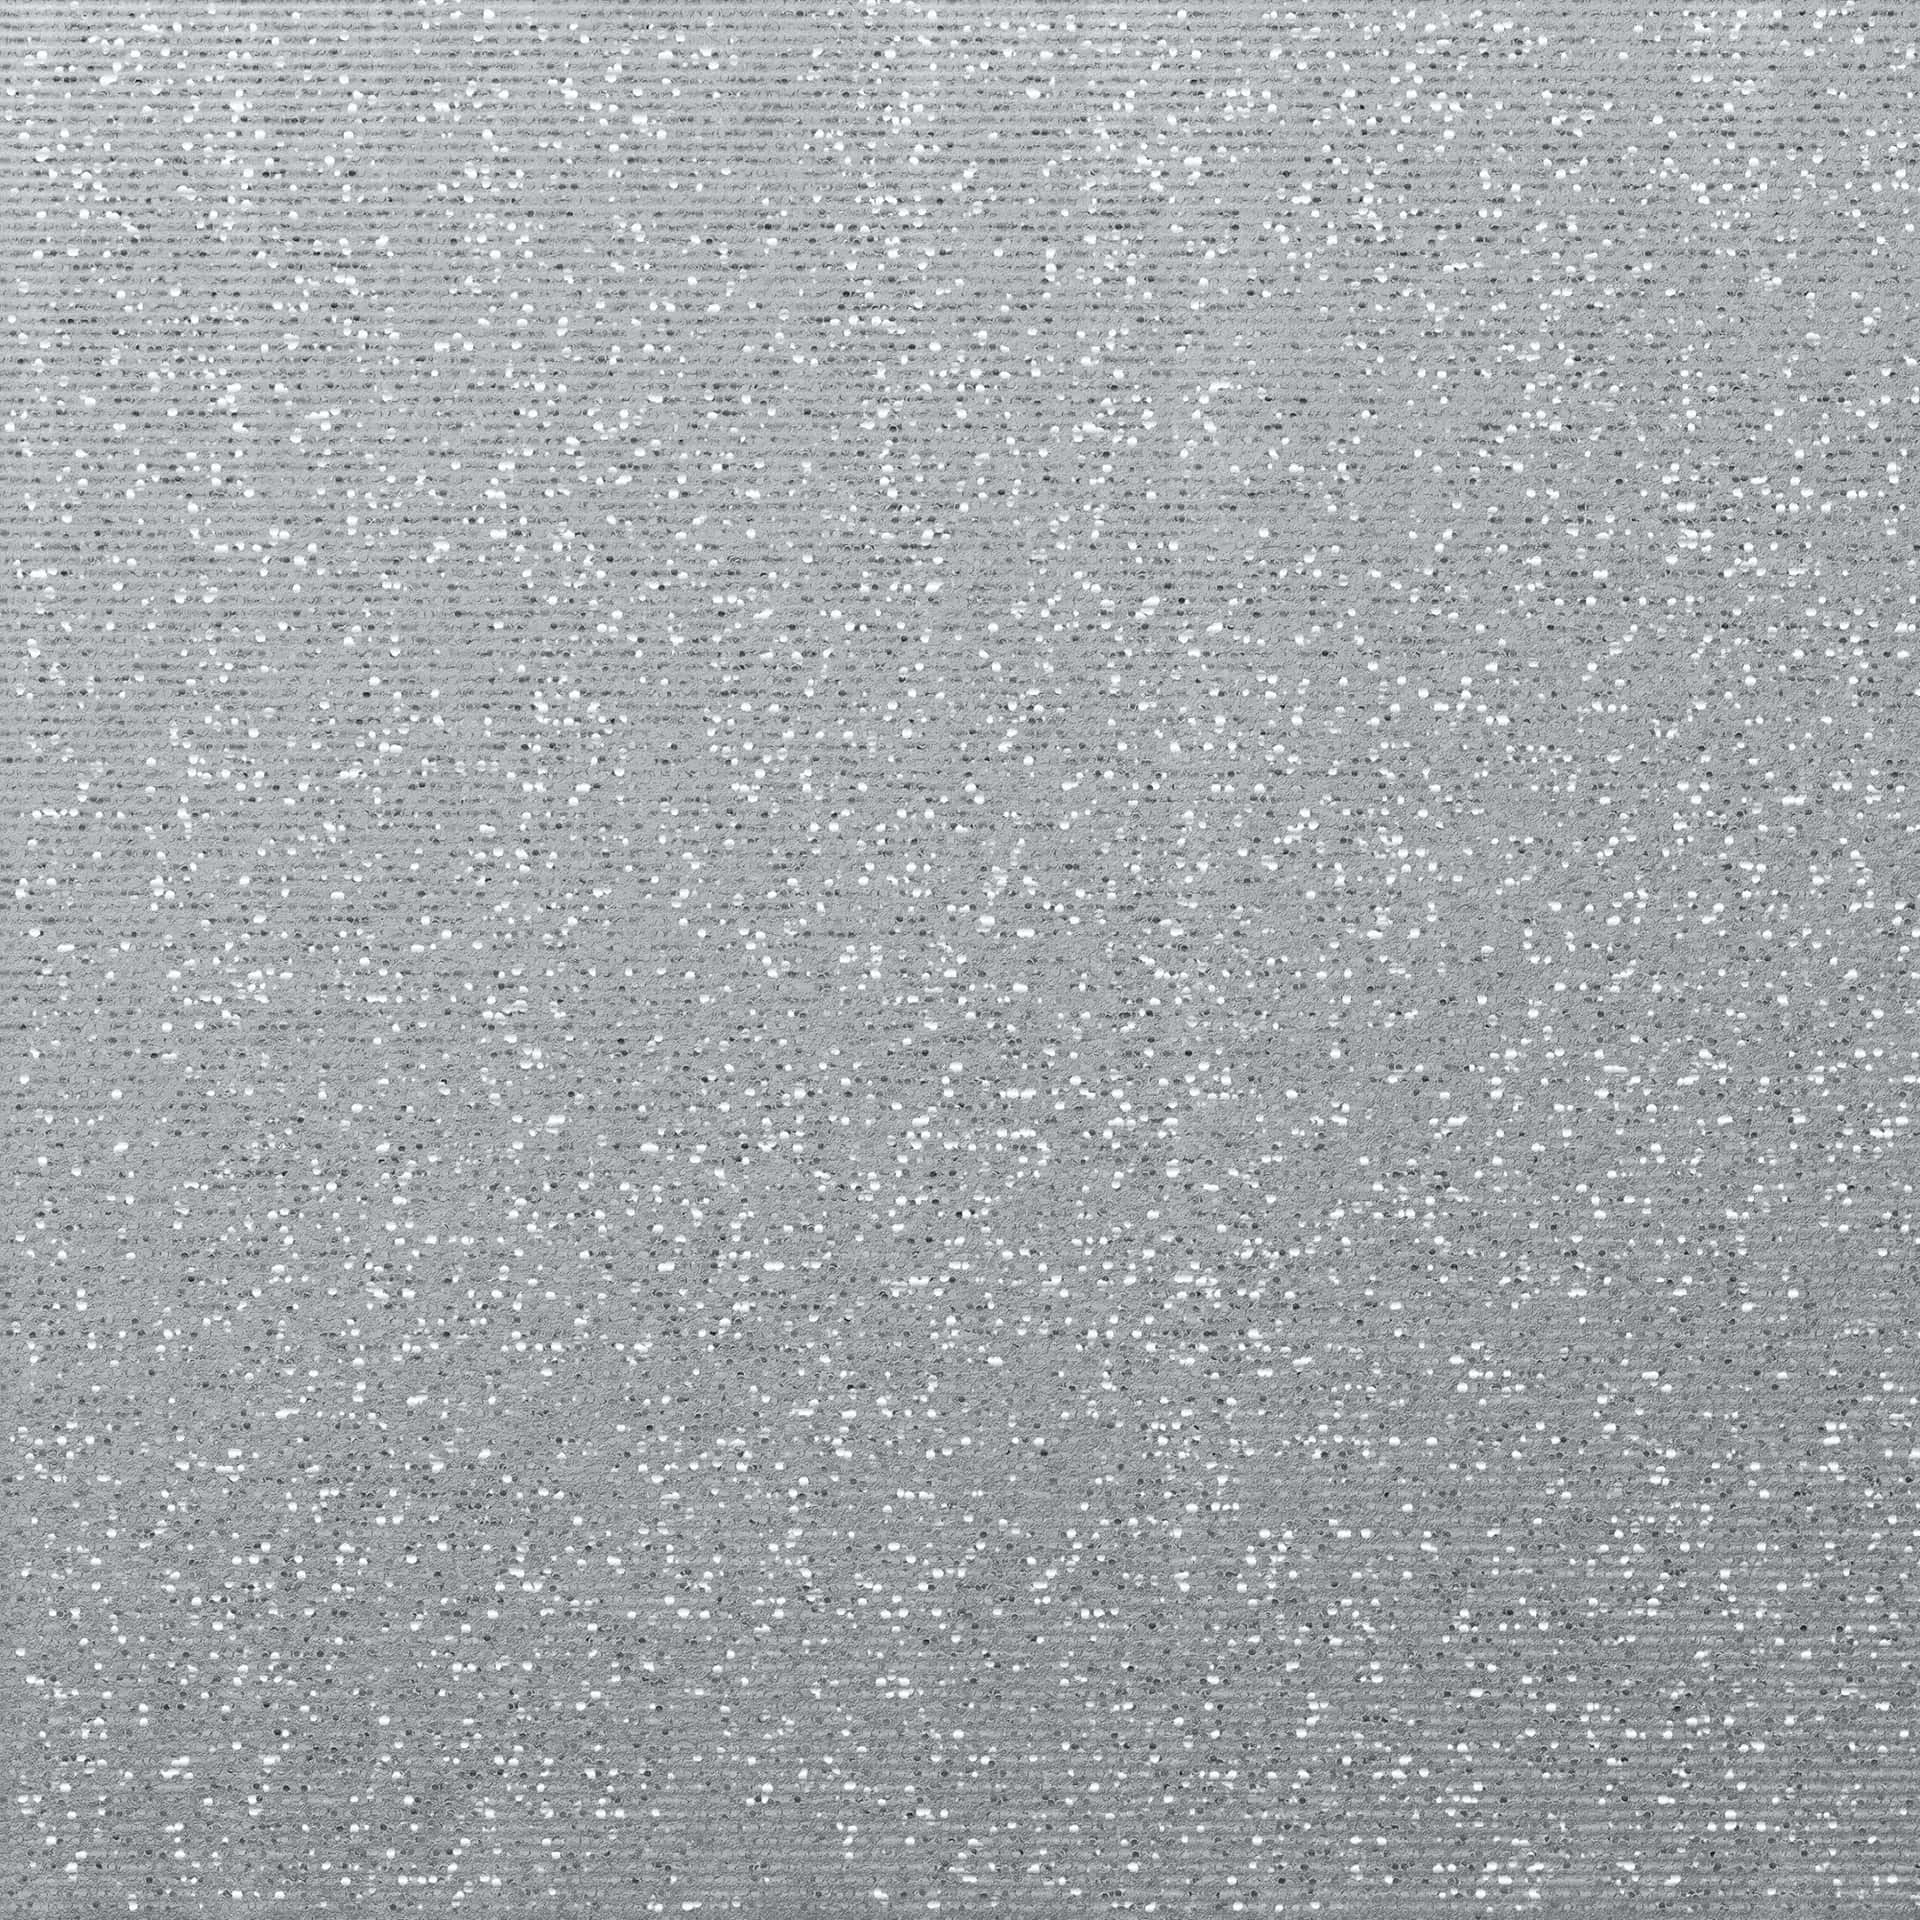 Metallic Silver Background Fine Glitter Particle